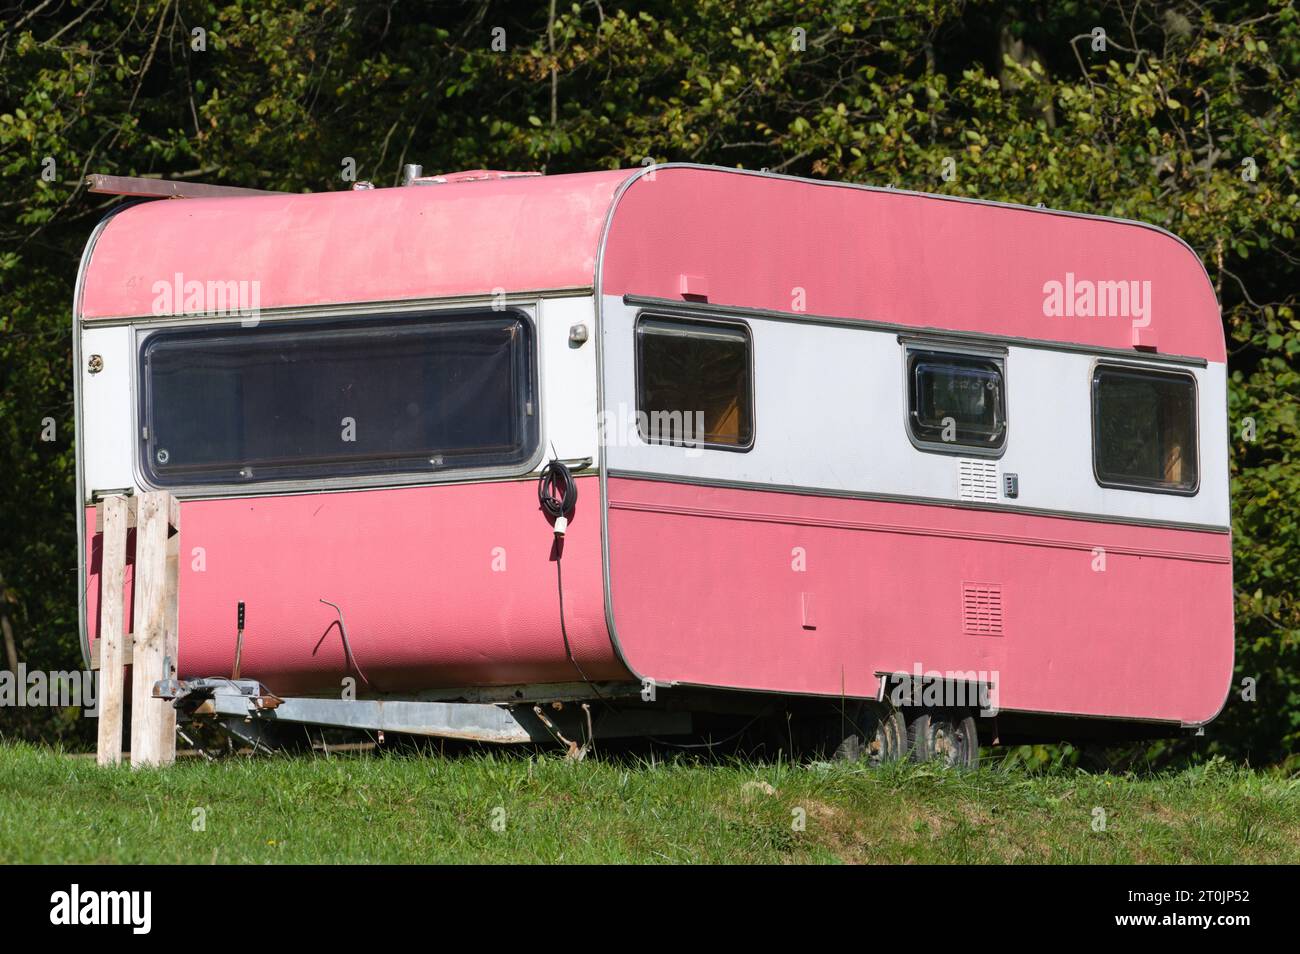 Vintage pink caravan in campsite. Very unusual and funny. Stock Photo